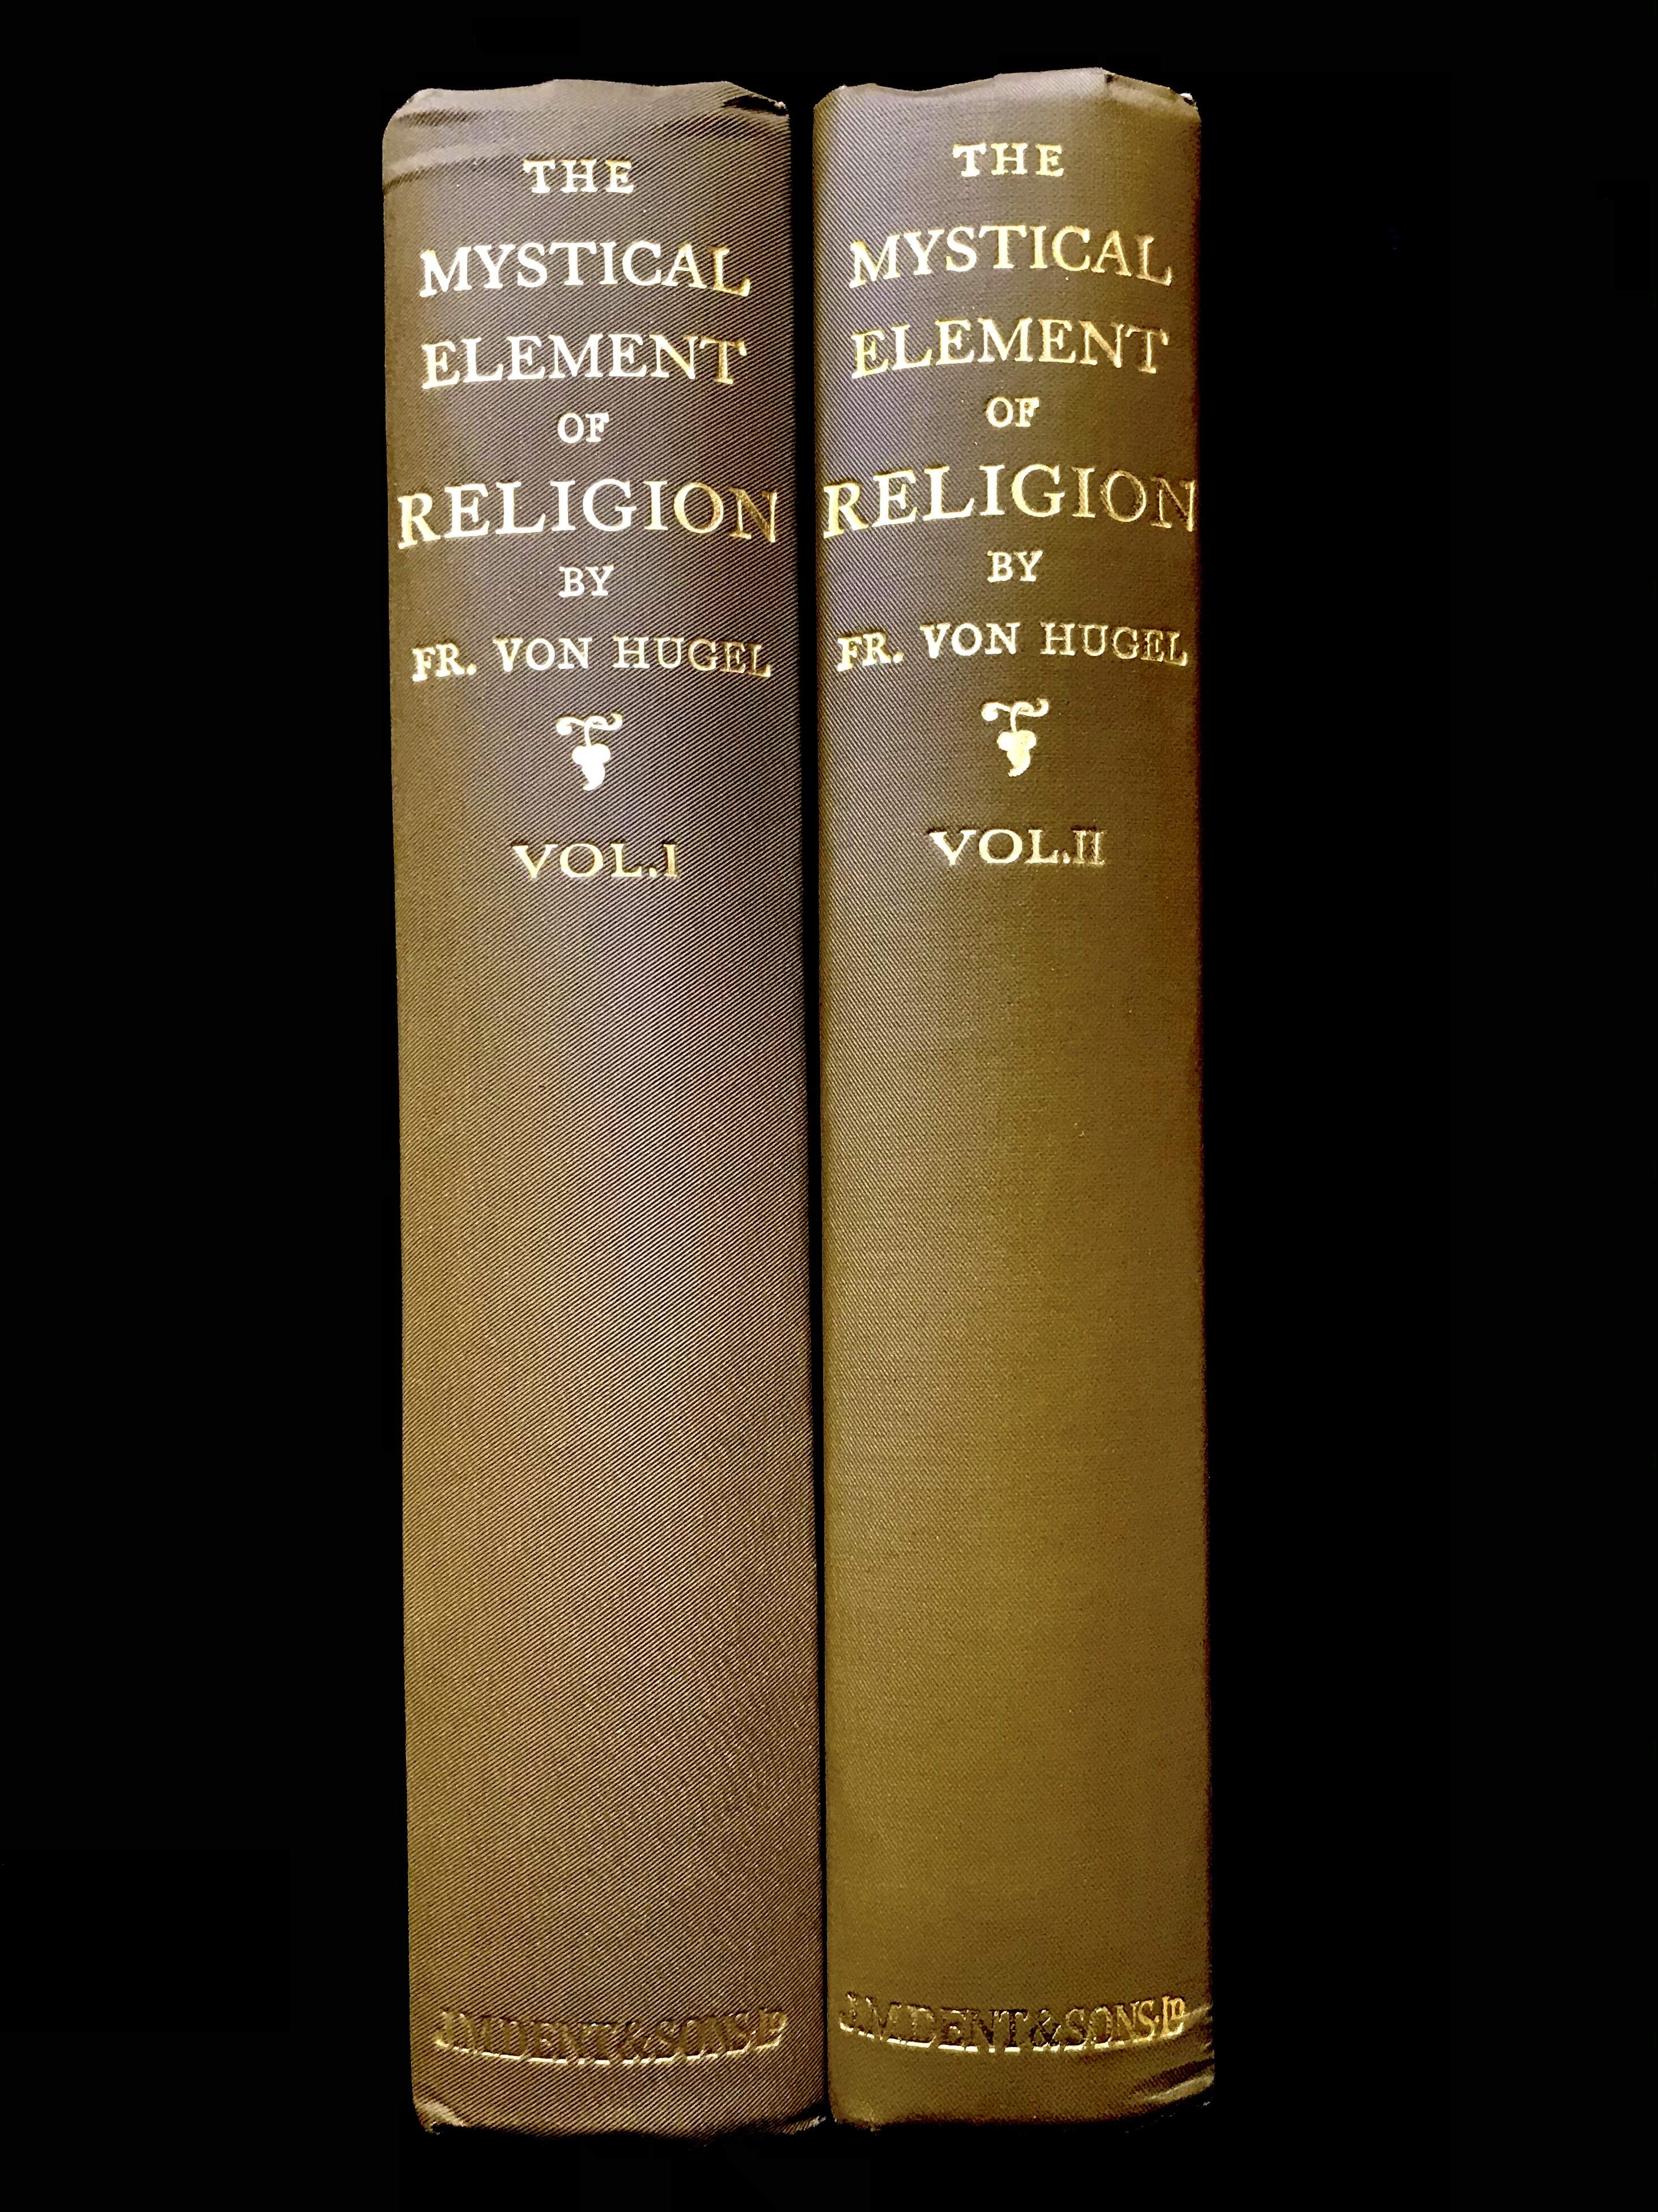 The Mystical Element of Religion 2 Volumes by Baron F. Von Hügel